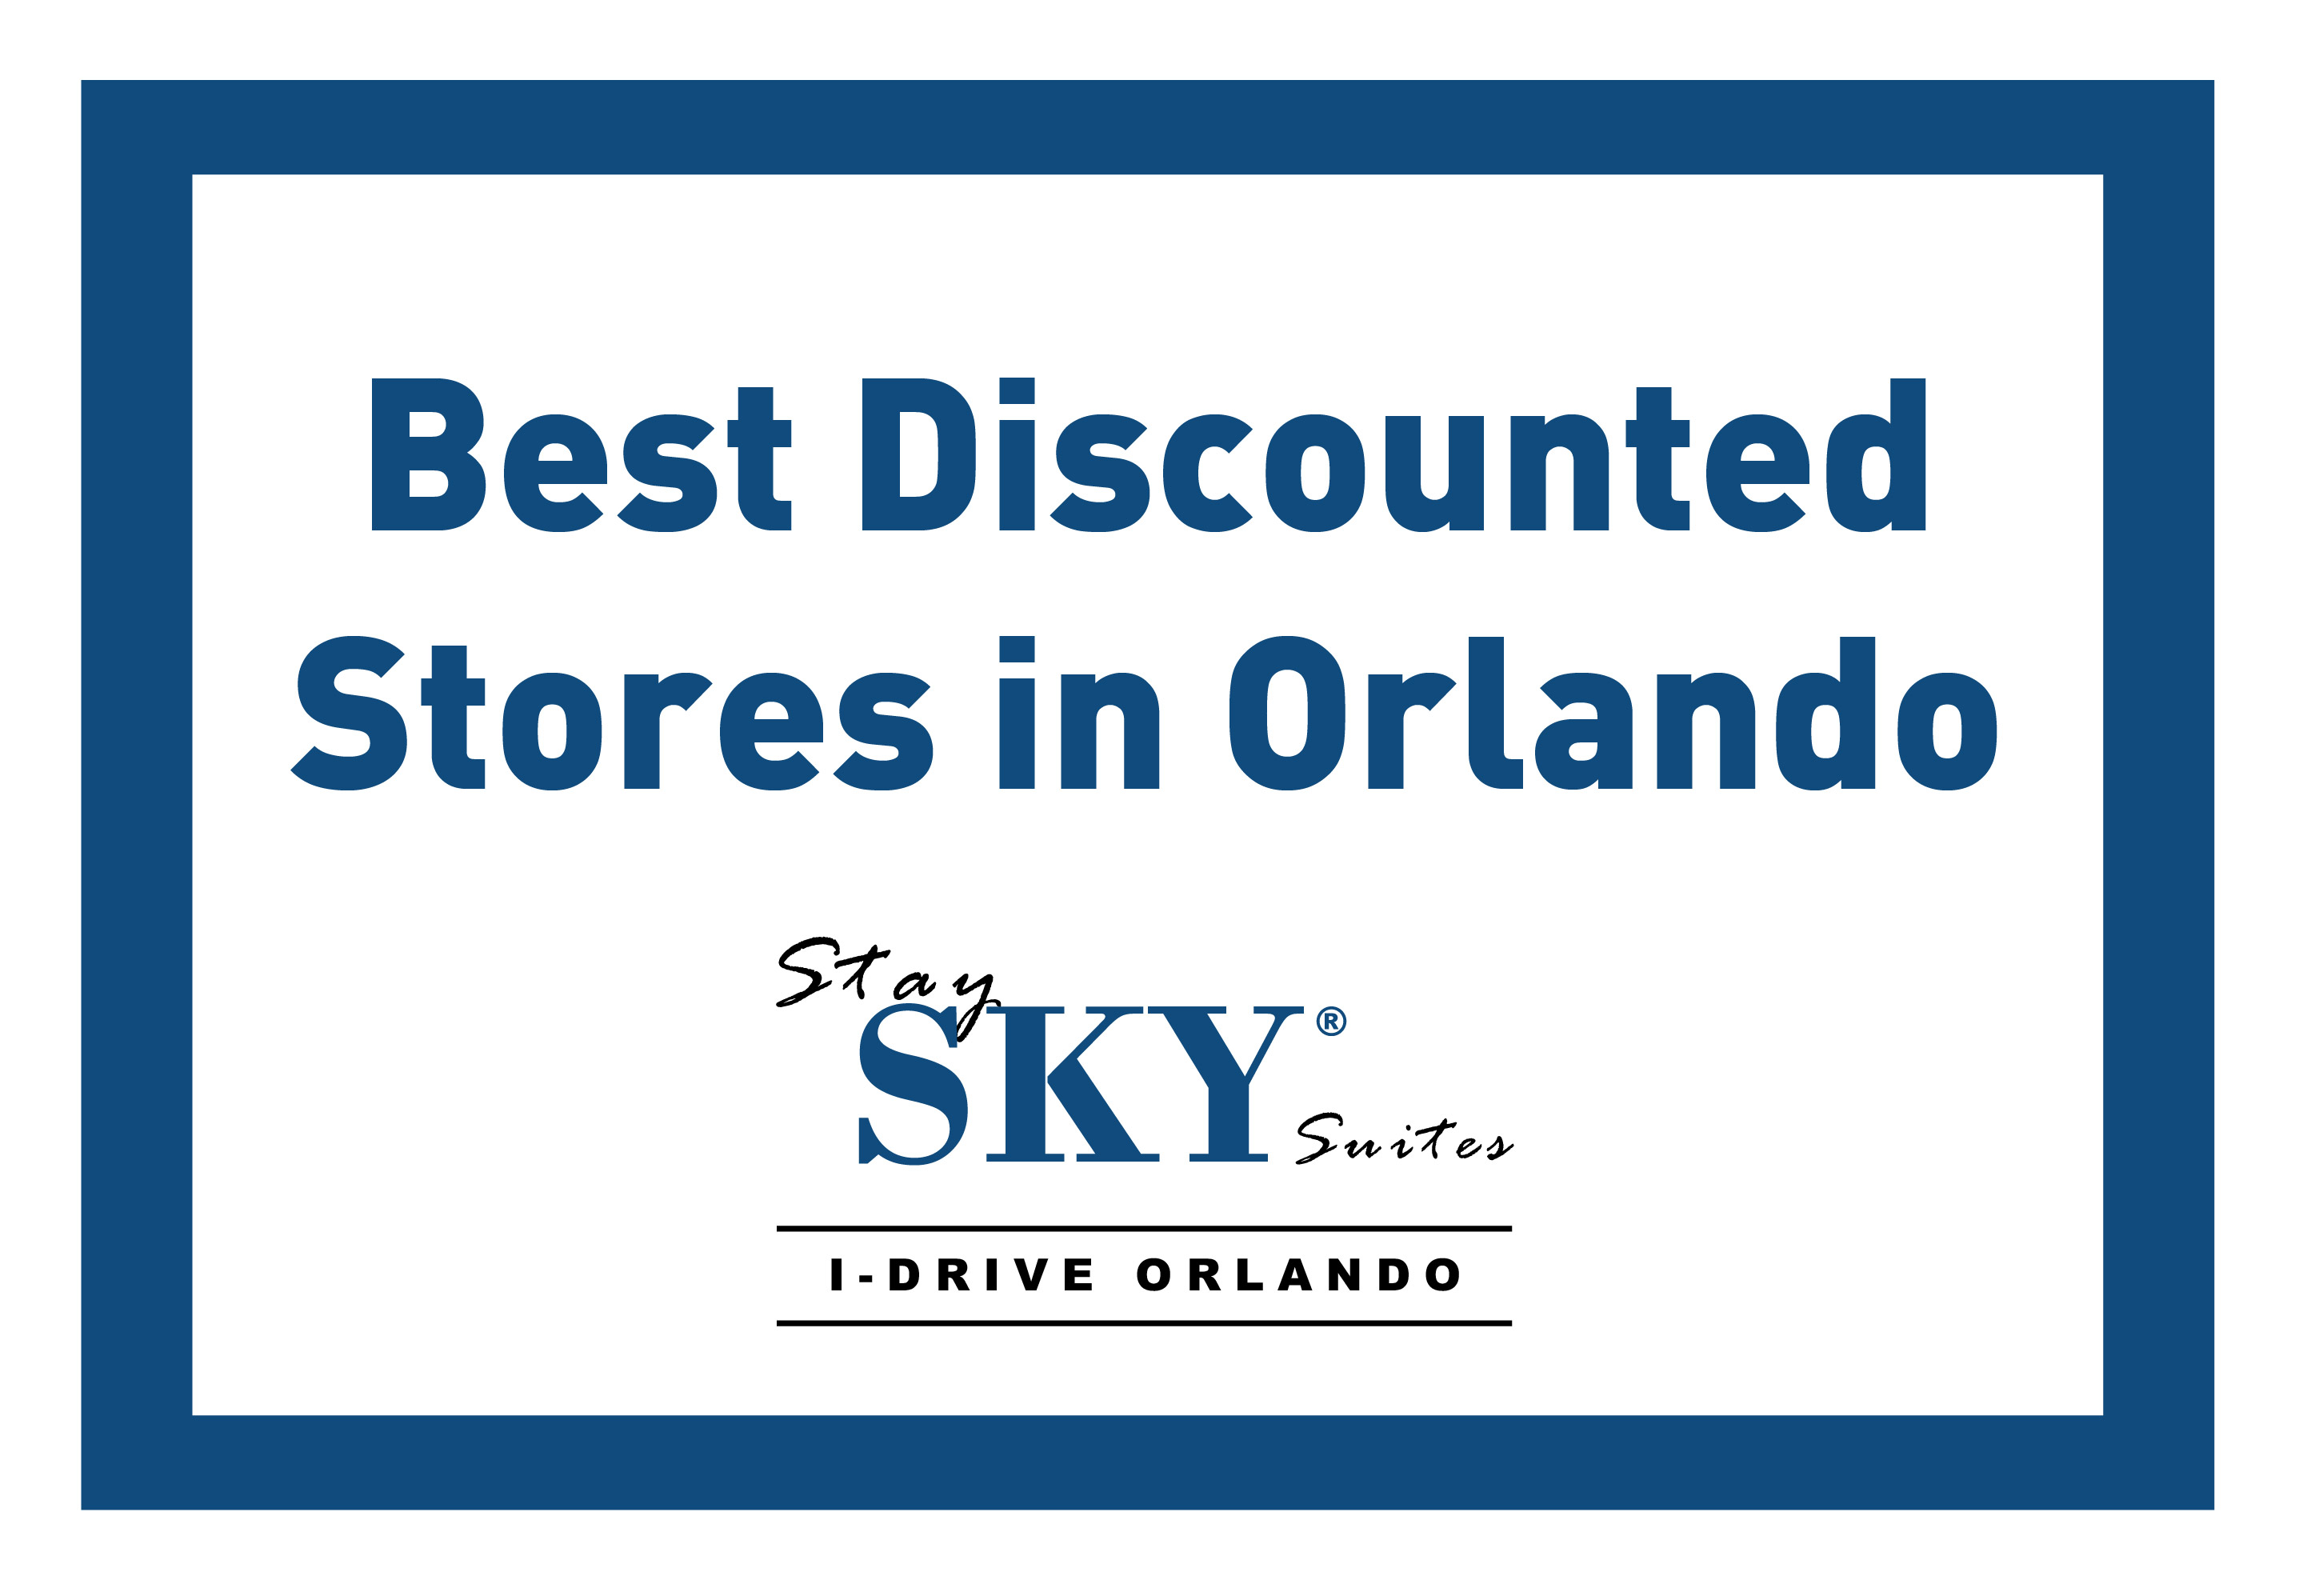 StaySky Suites I - Drive - Orlando Resorts - DiscountedStores